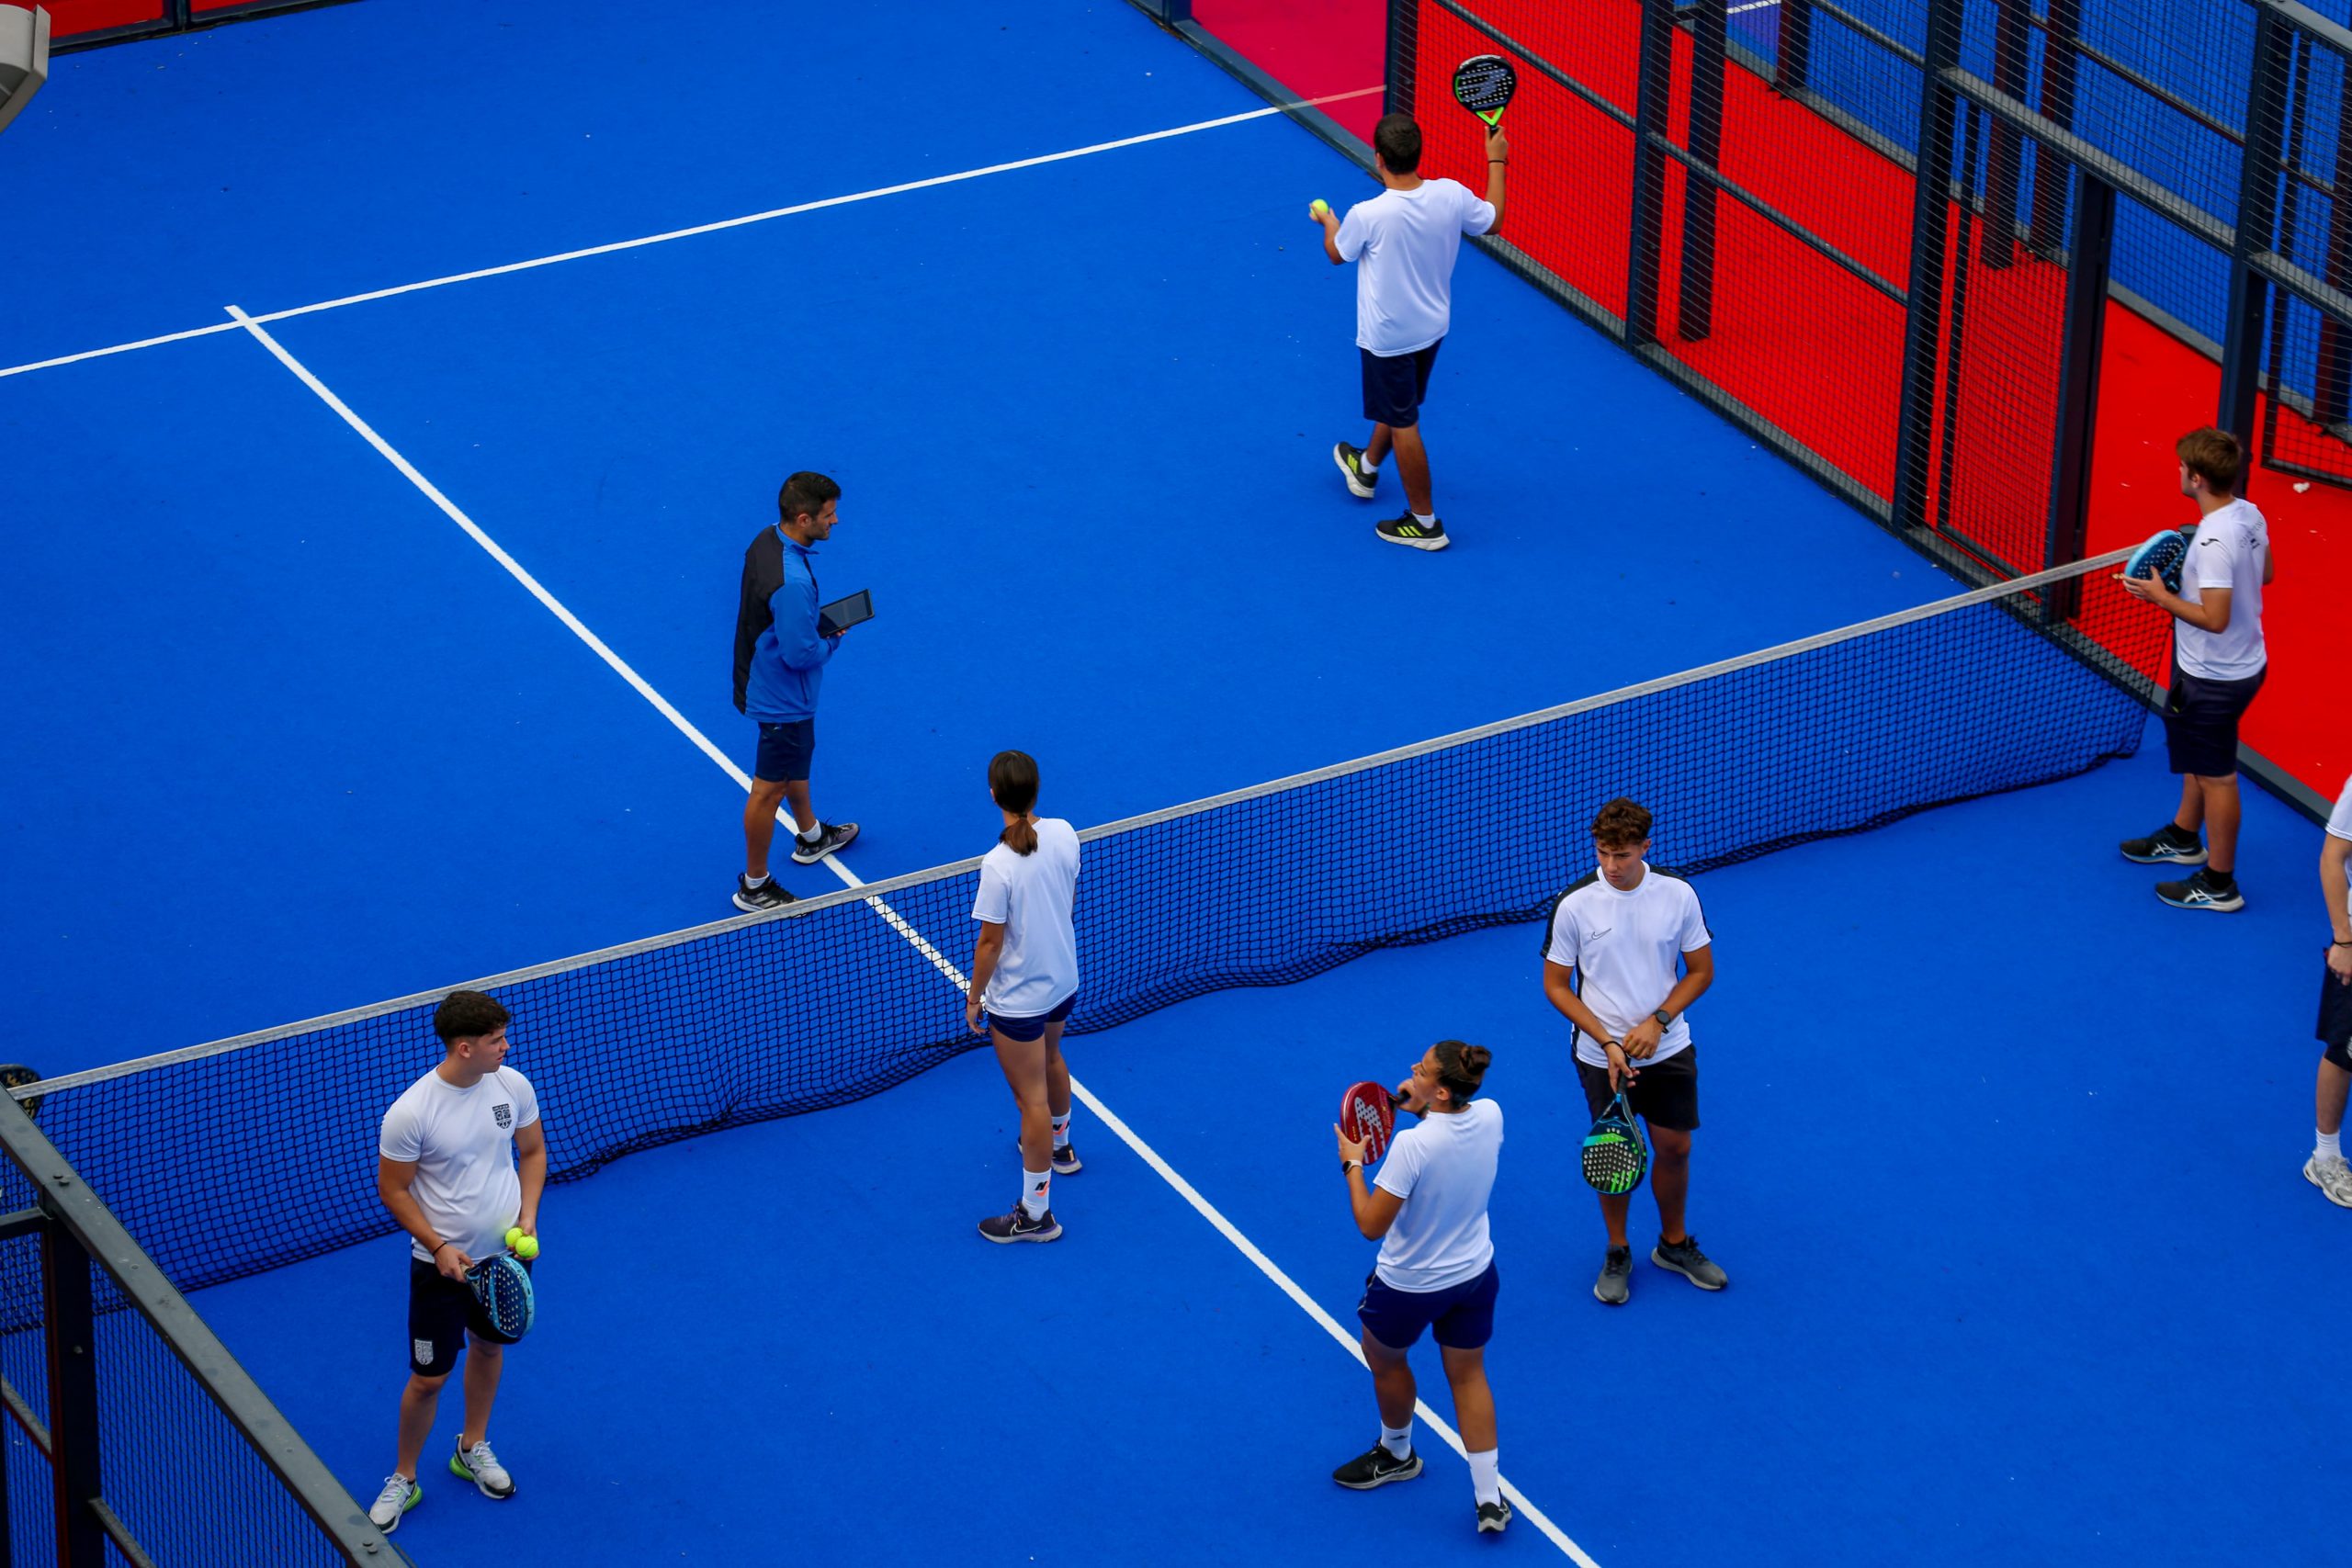 Improvements to paddle tennis court facilities at Lope de Vega School